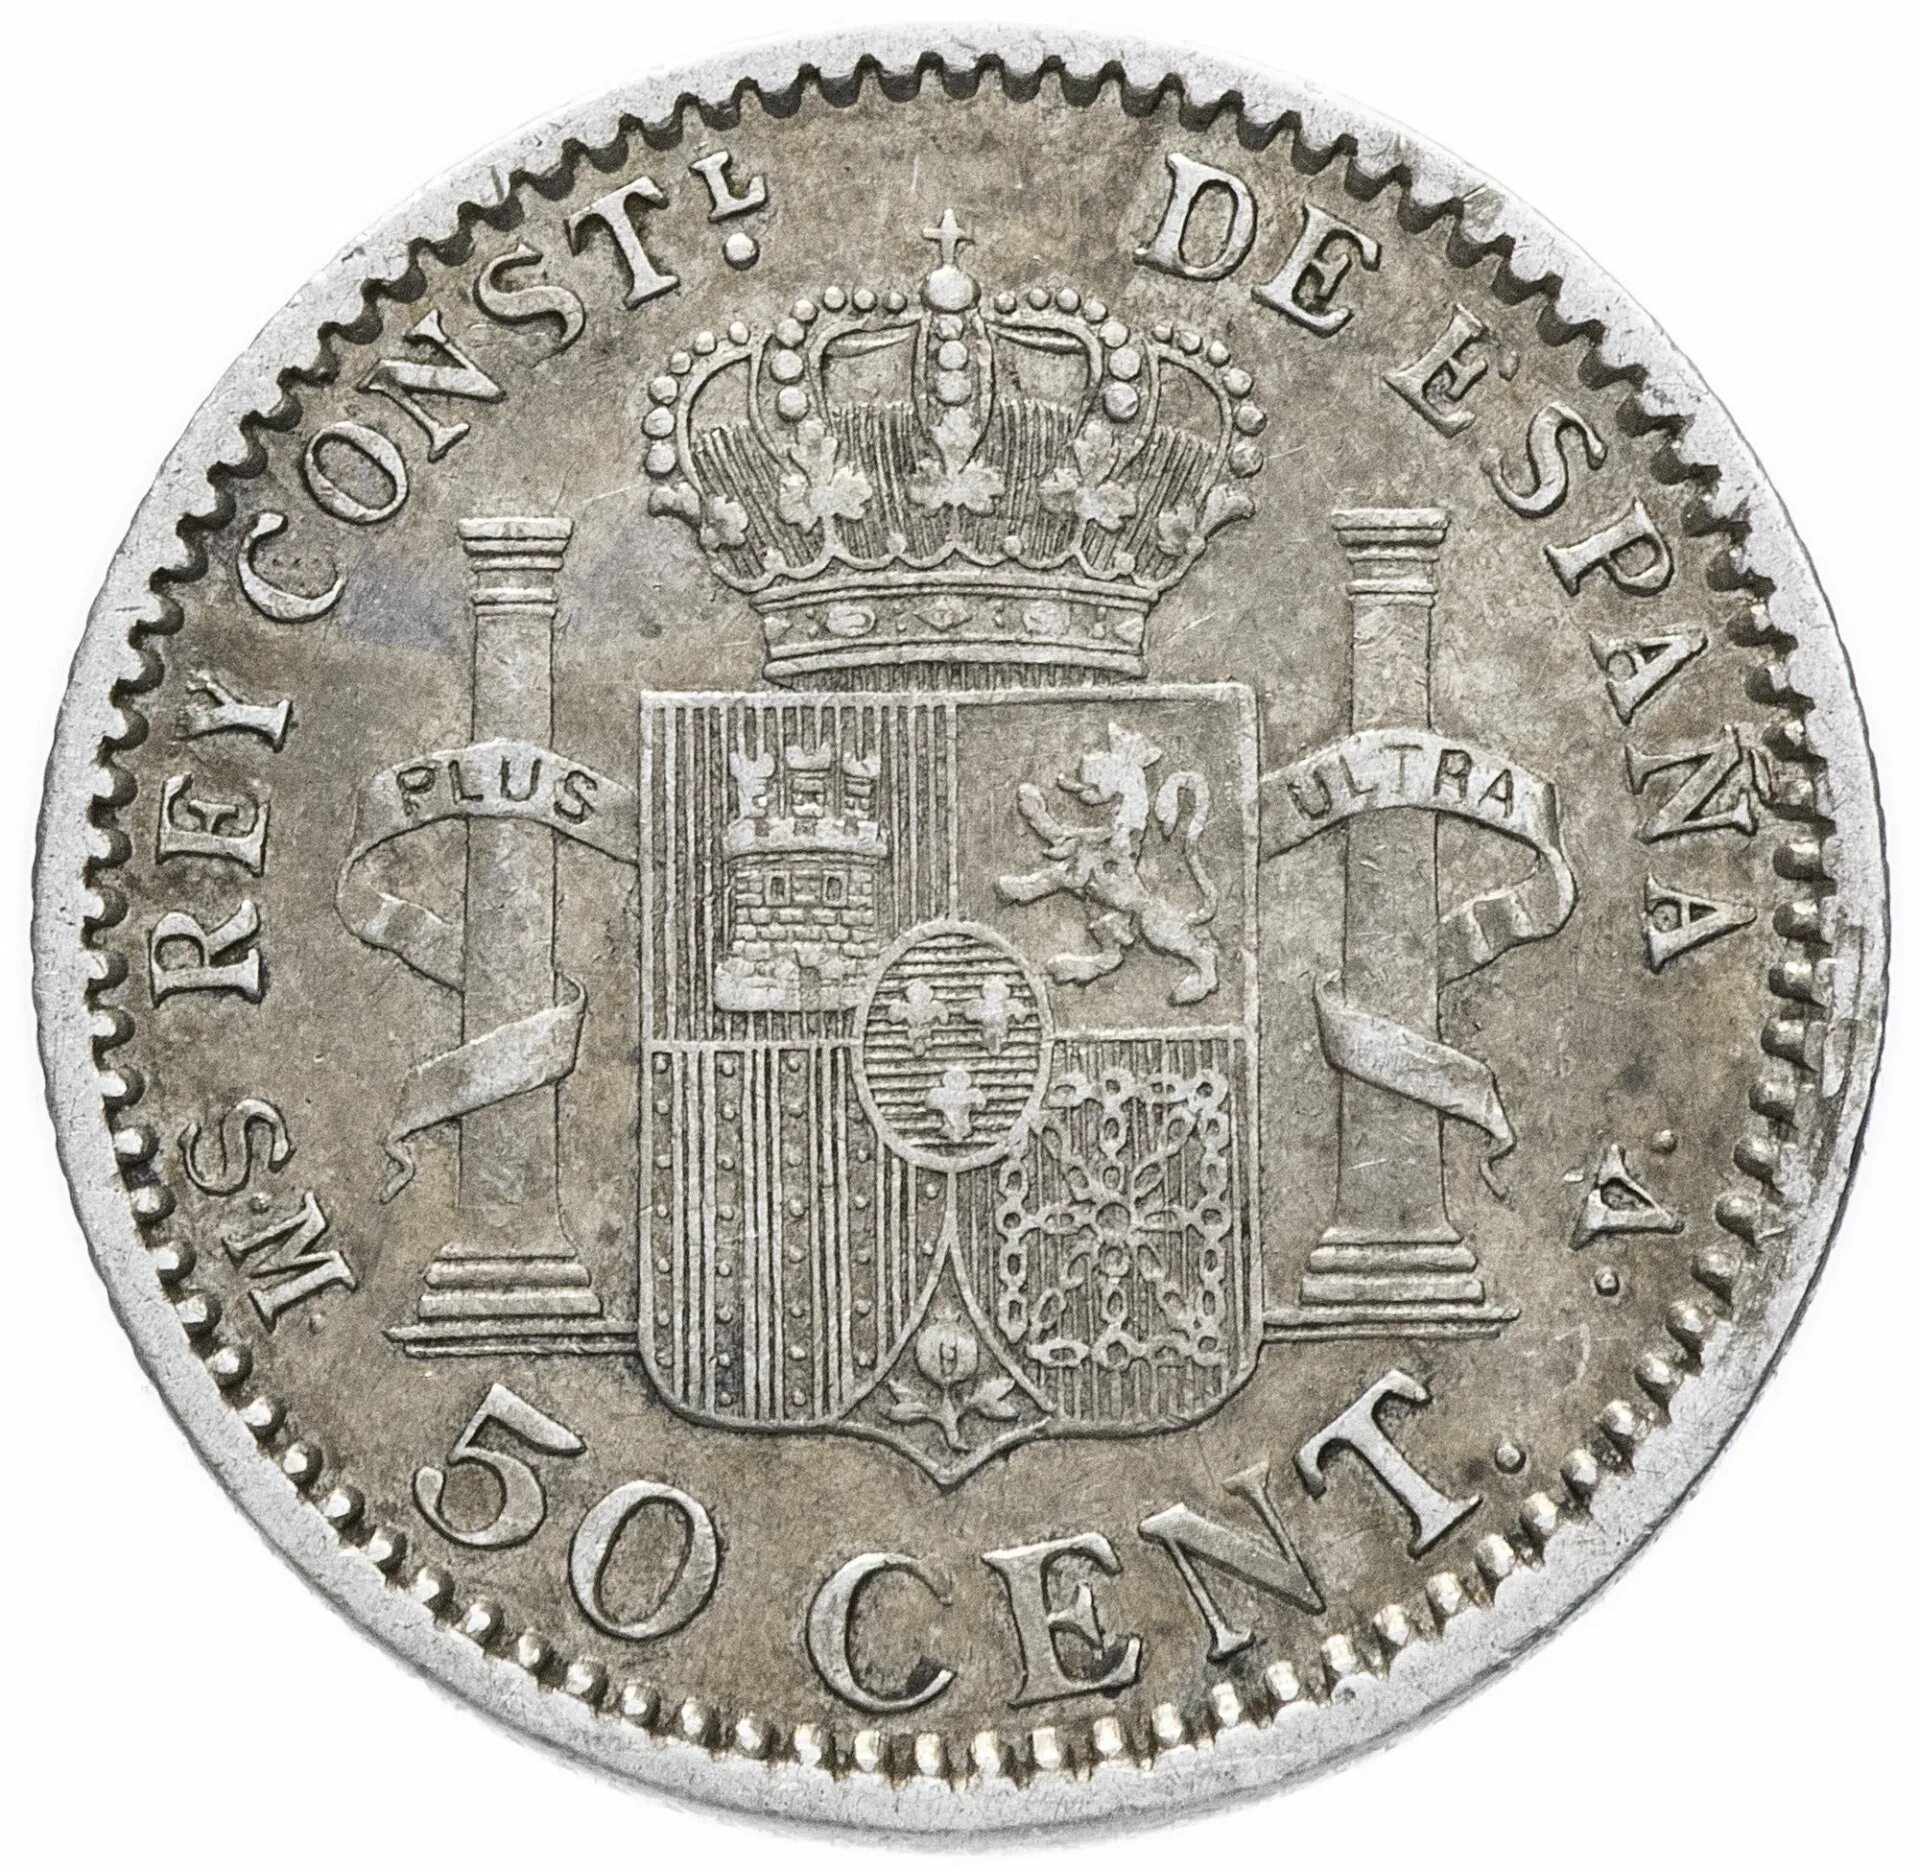 Монета Испании сантимо. Монета Испания 1641. Монета Испании 1821 года. Испанская монета с профилем.